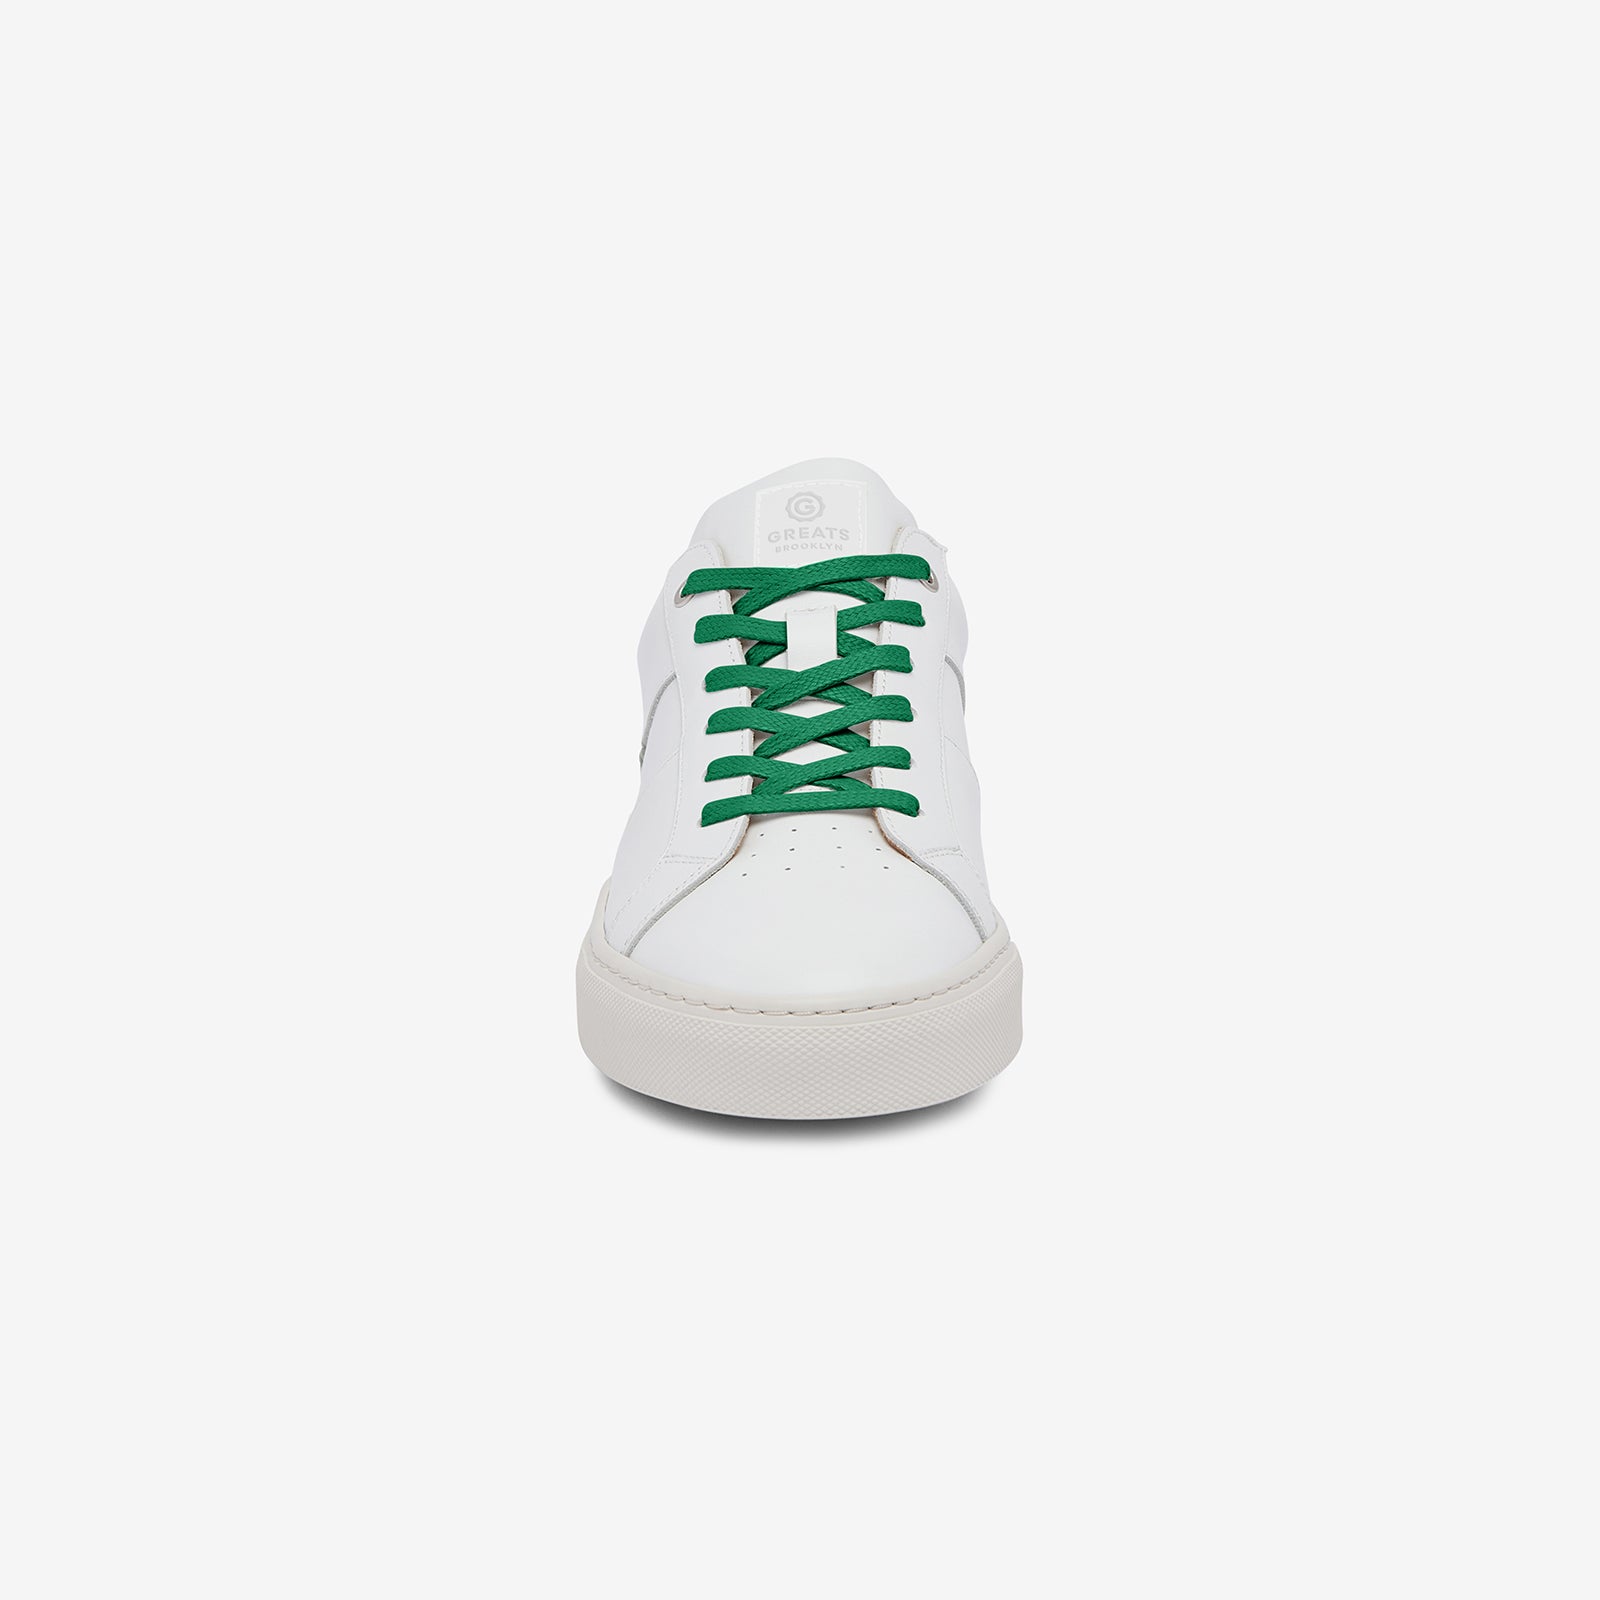 GREATS Premium Shoelaces - Green